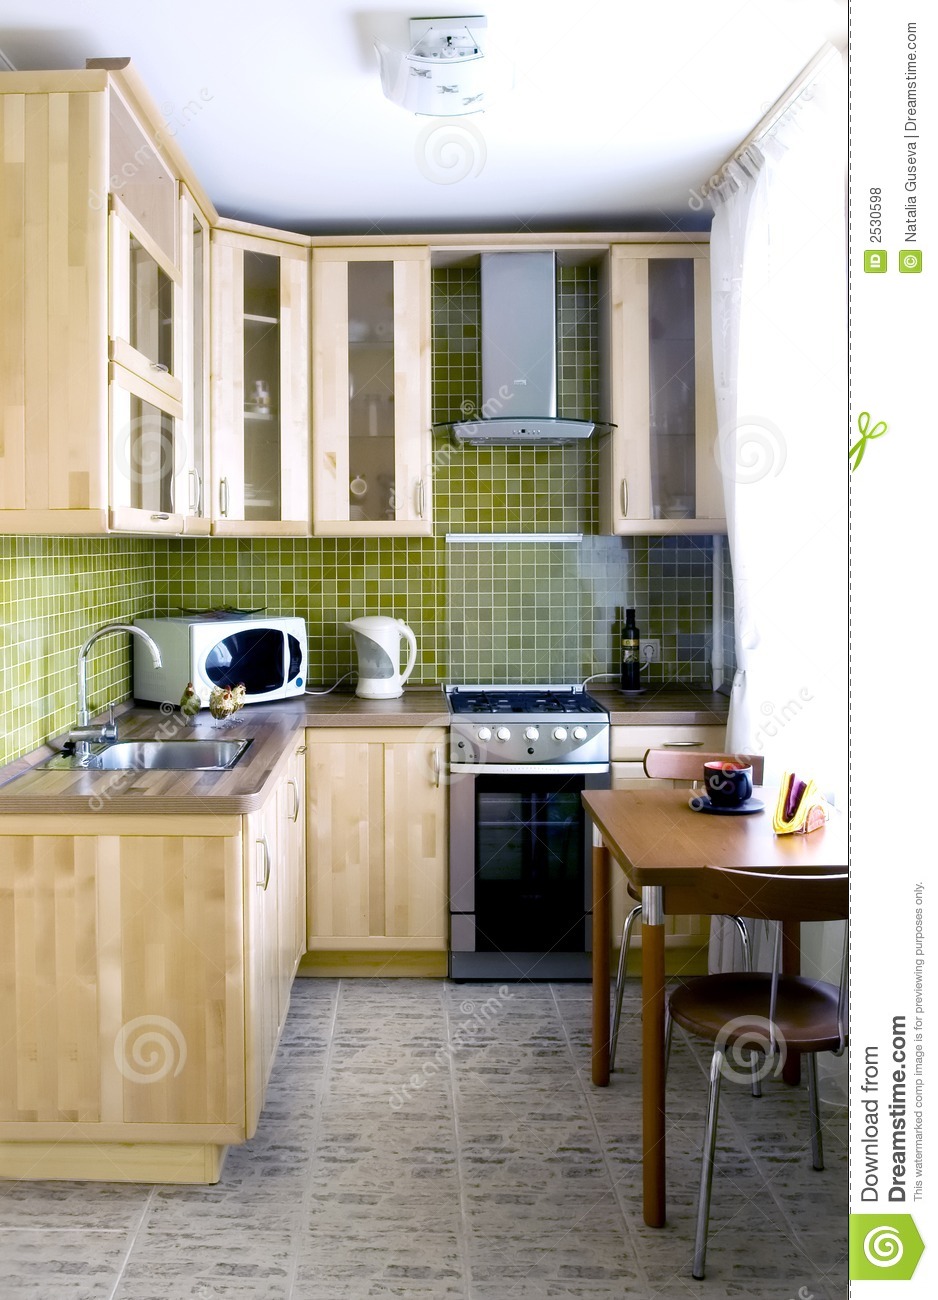 Natural Wood Kitchen Cabinets